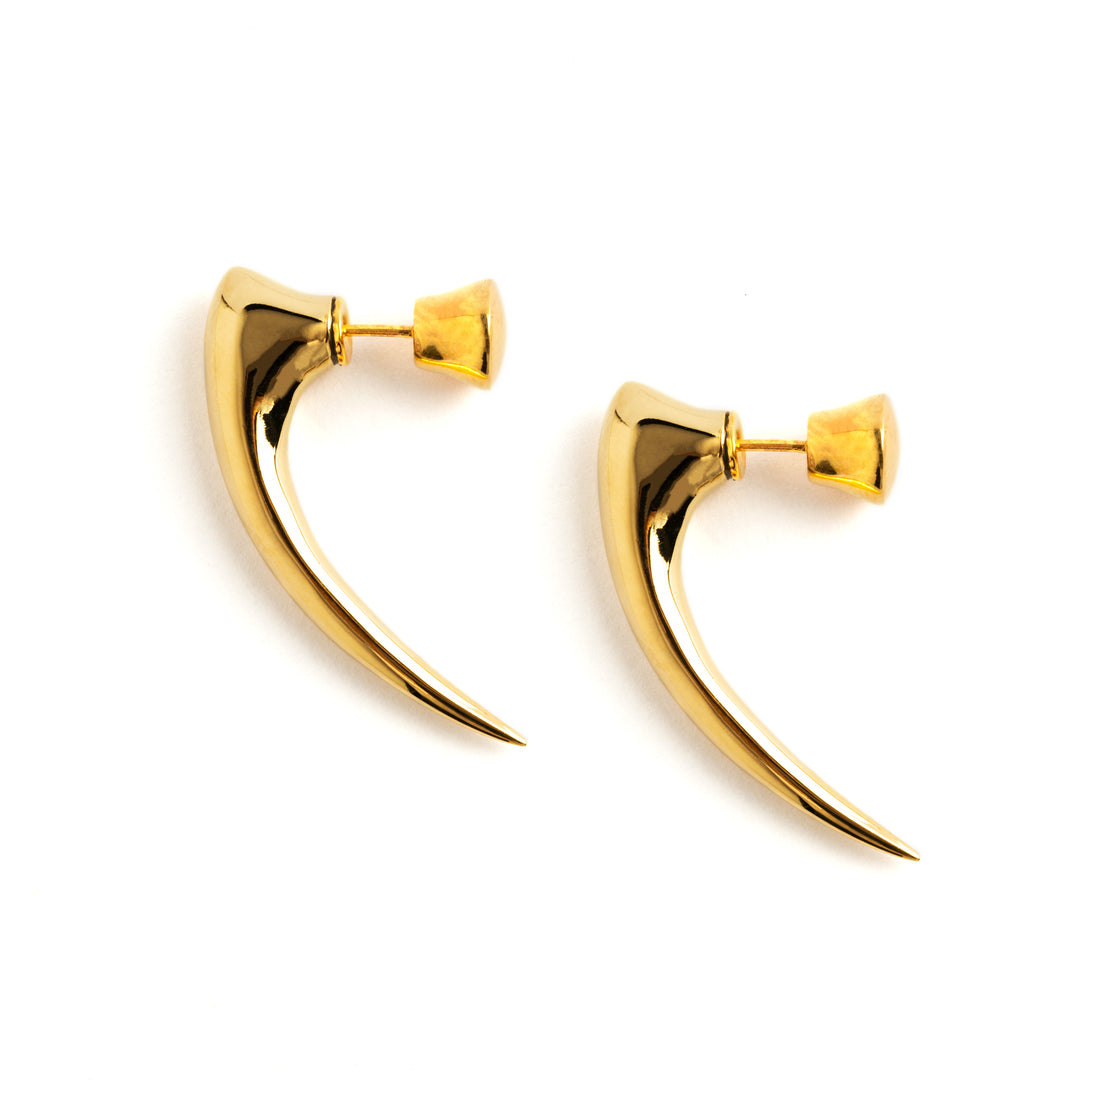 pair of Gold talon spike fake gauge earrings side view